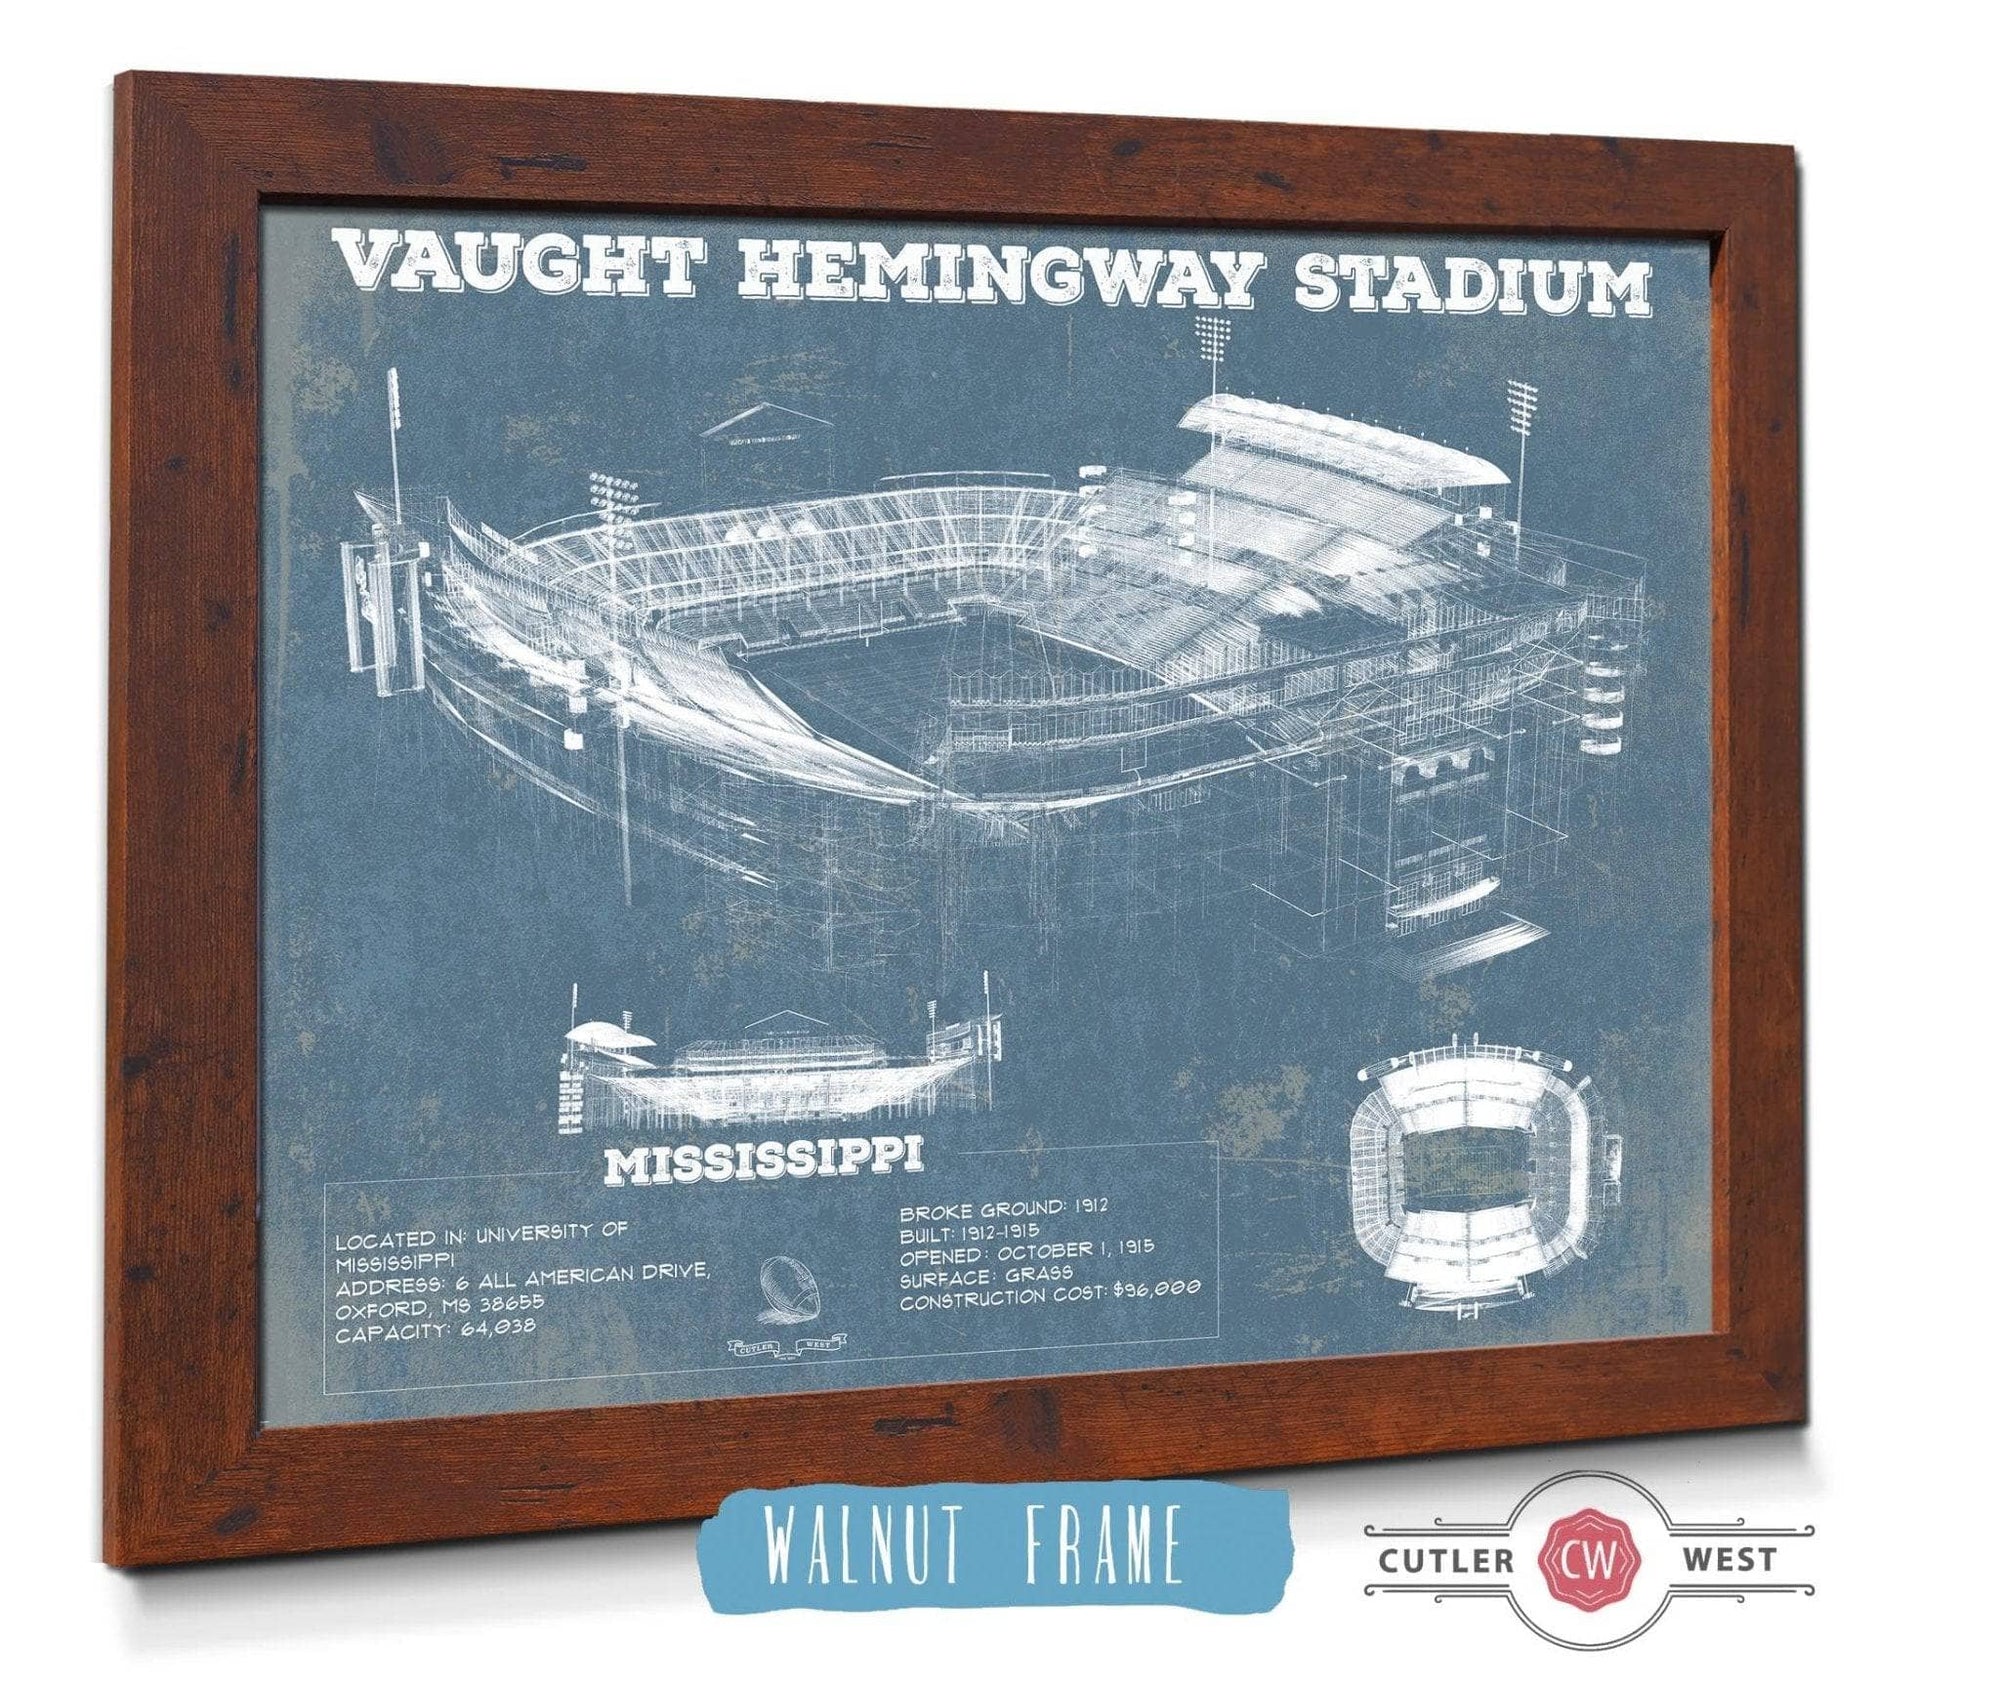 Cutler West College Football Collection 14" x 11" / Walnut Frame Vaught-Hemingway Stadium - Ole Miss Football Vintage Art Print 845000329_9436